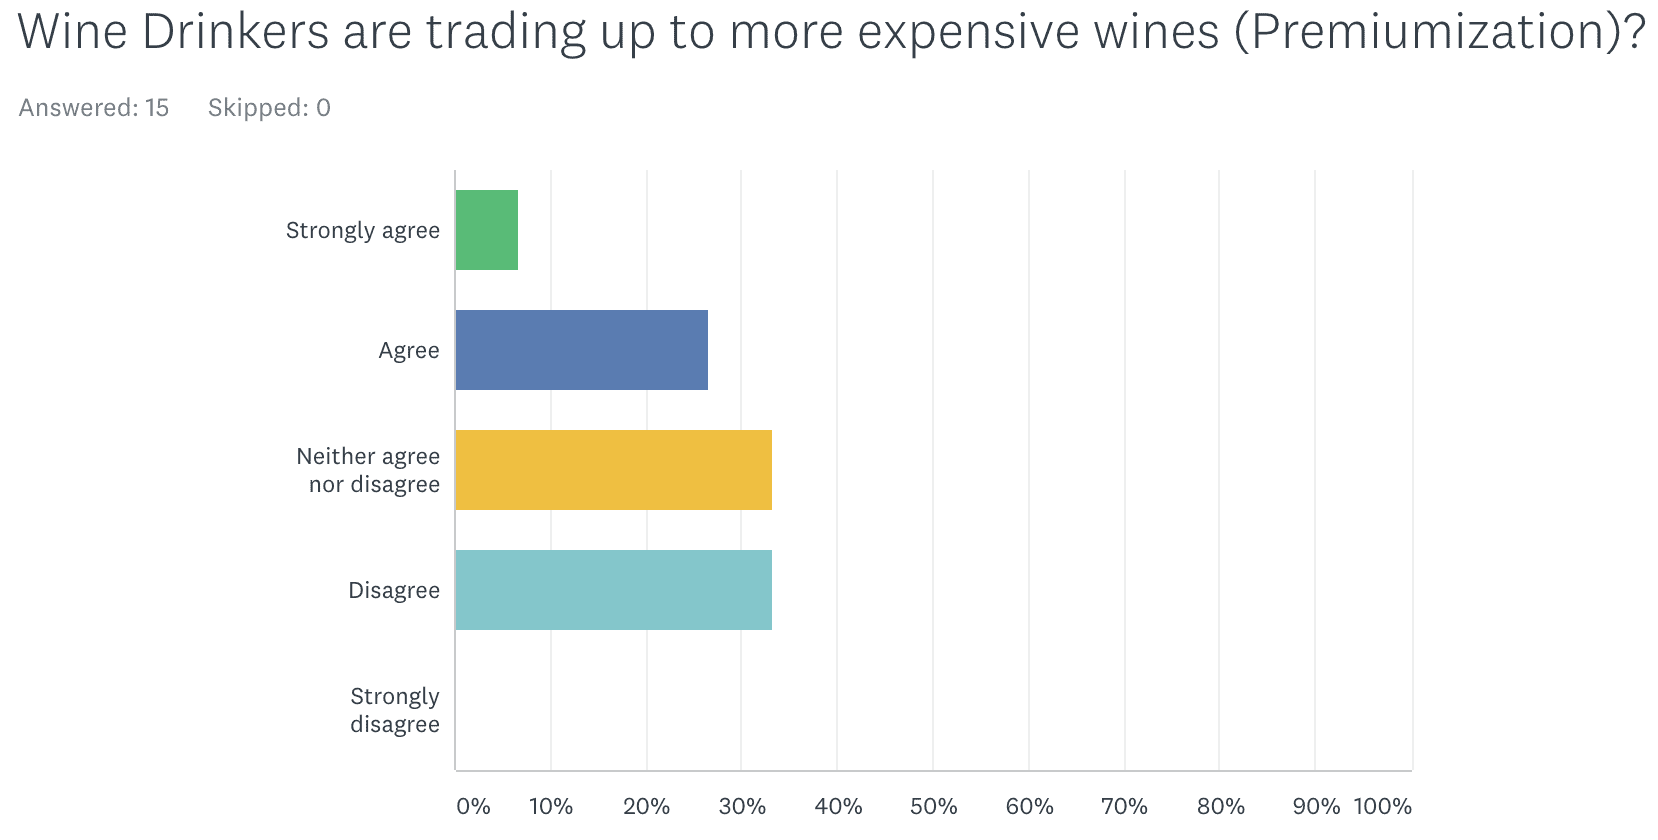 BC Wine Trends